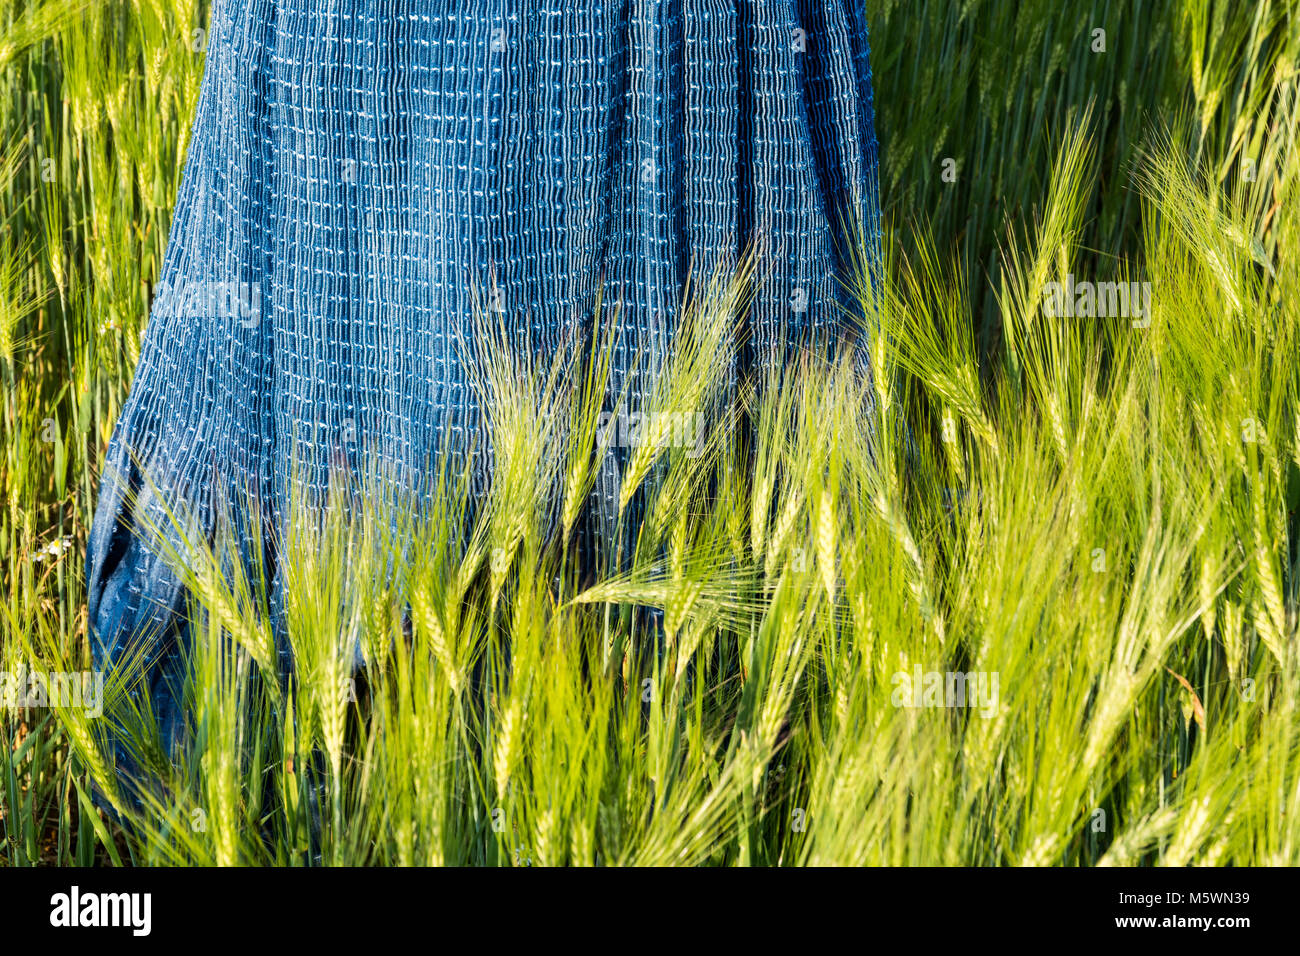 Romantic spring scene with blue skirt in green barley field. Hordeum vulgare. Long female dress in grain spikes of sunlit cornfield. Hot sunny weather. Stock Photo